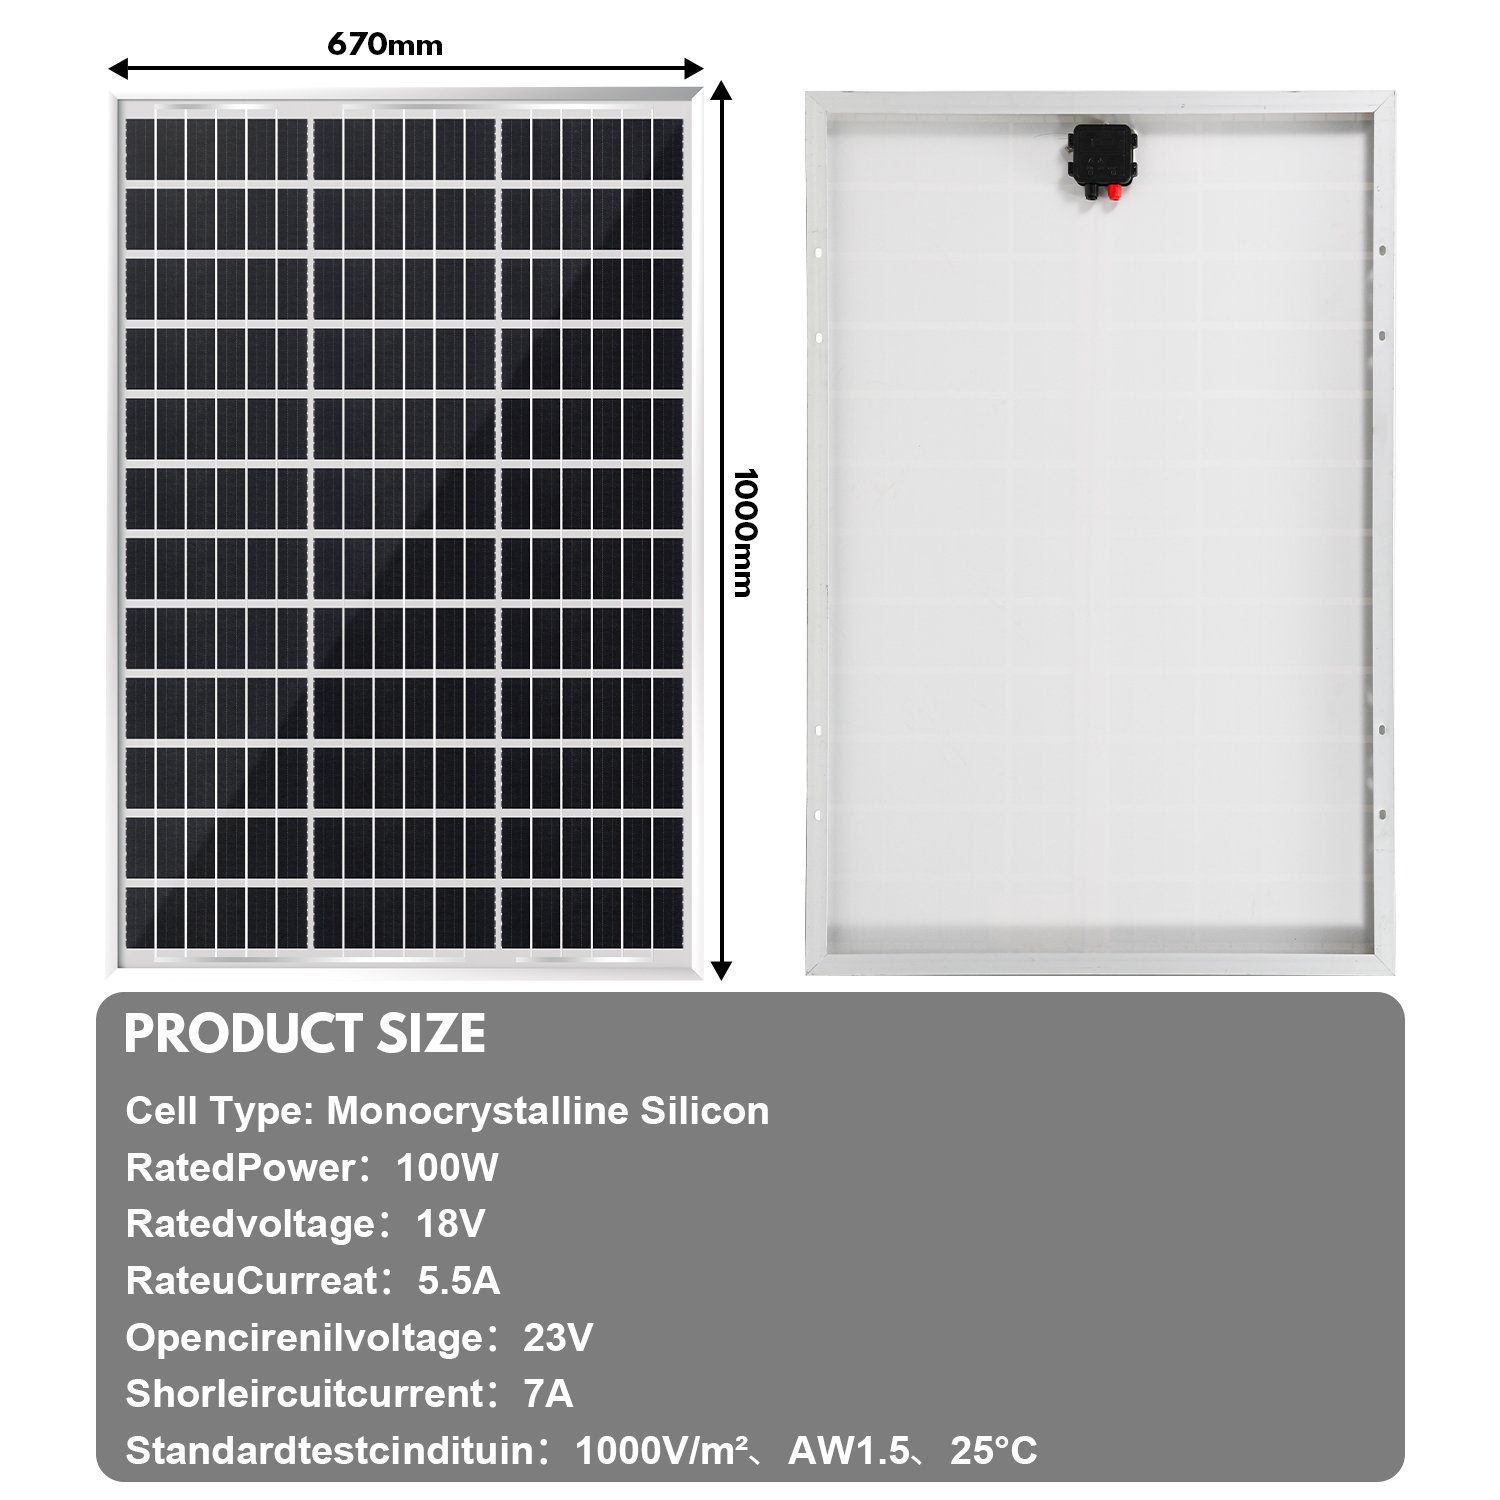 Gimisgu 100W 100 Solarladegerät, Solarpanel Solaranlage W Solaranlage 12V, Solarpanel